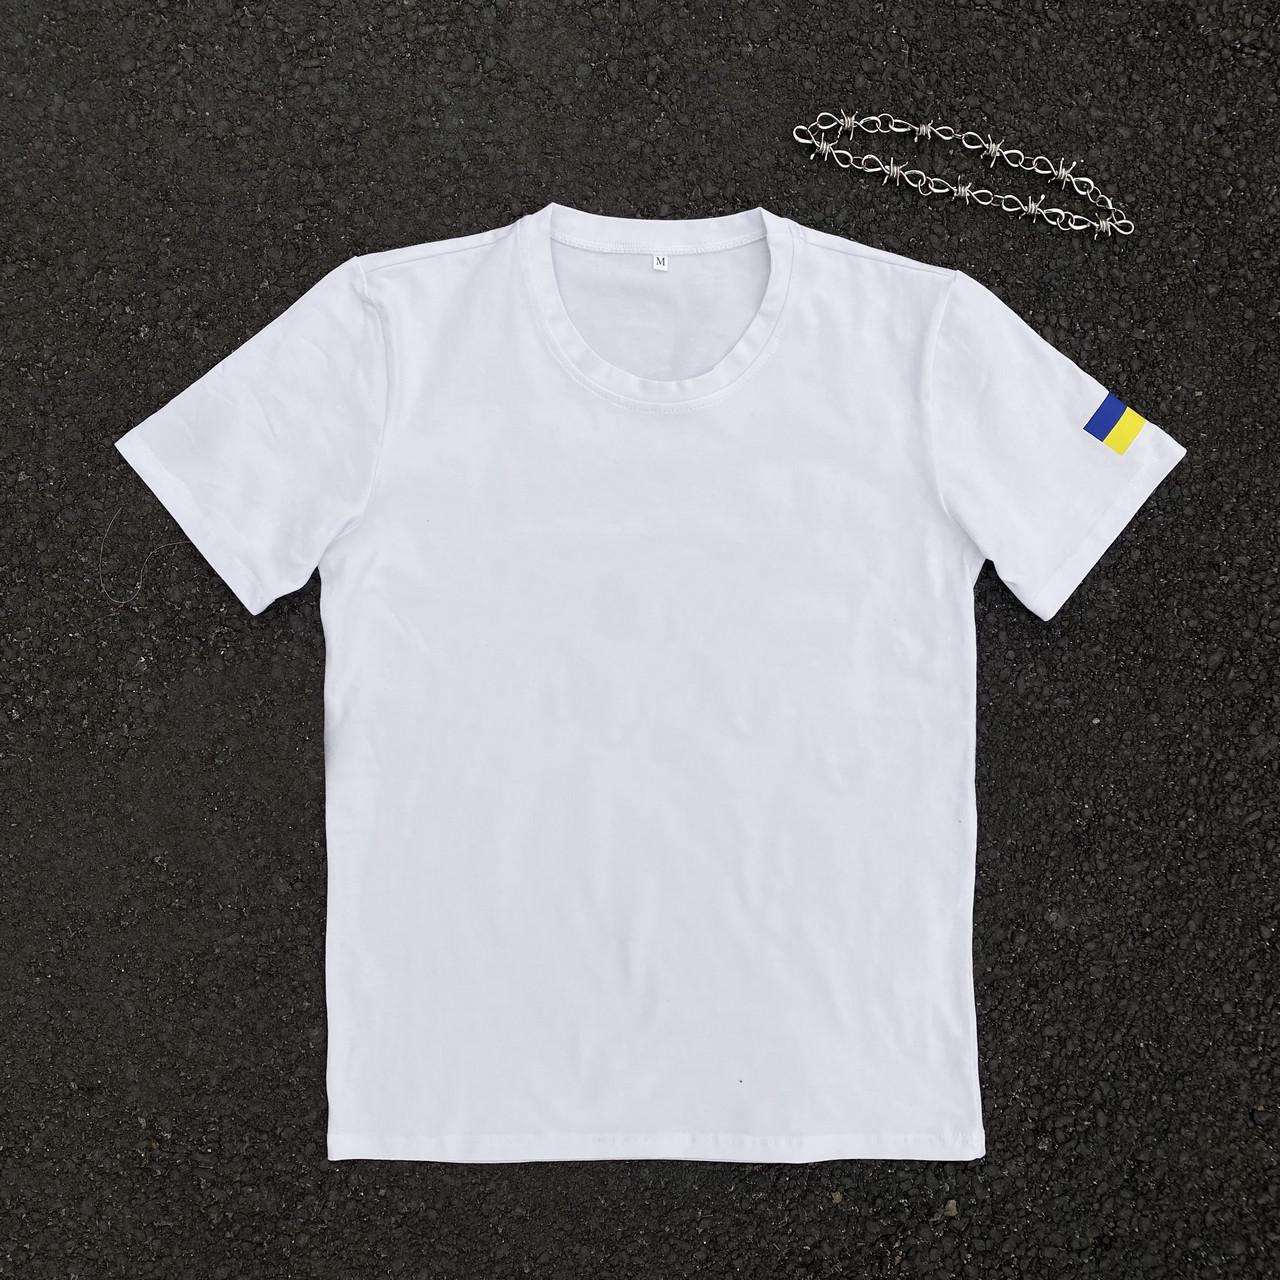 Мужская футболка базовая белая с флагом Intruder - Фото 1